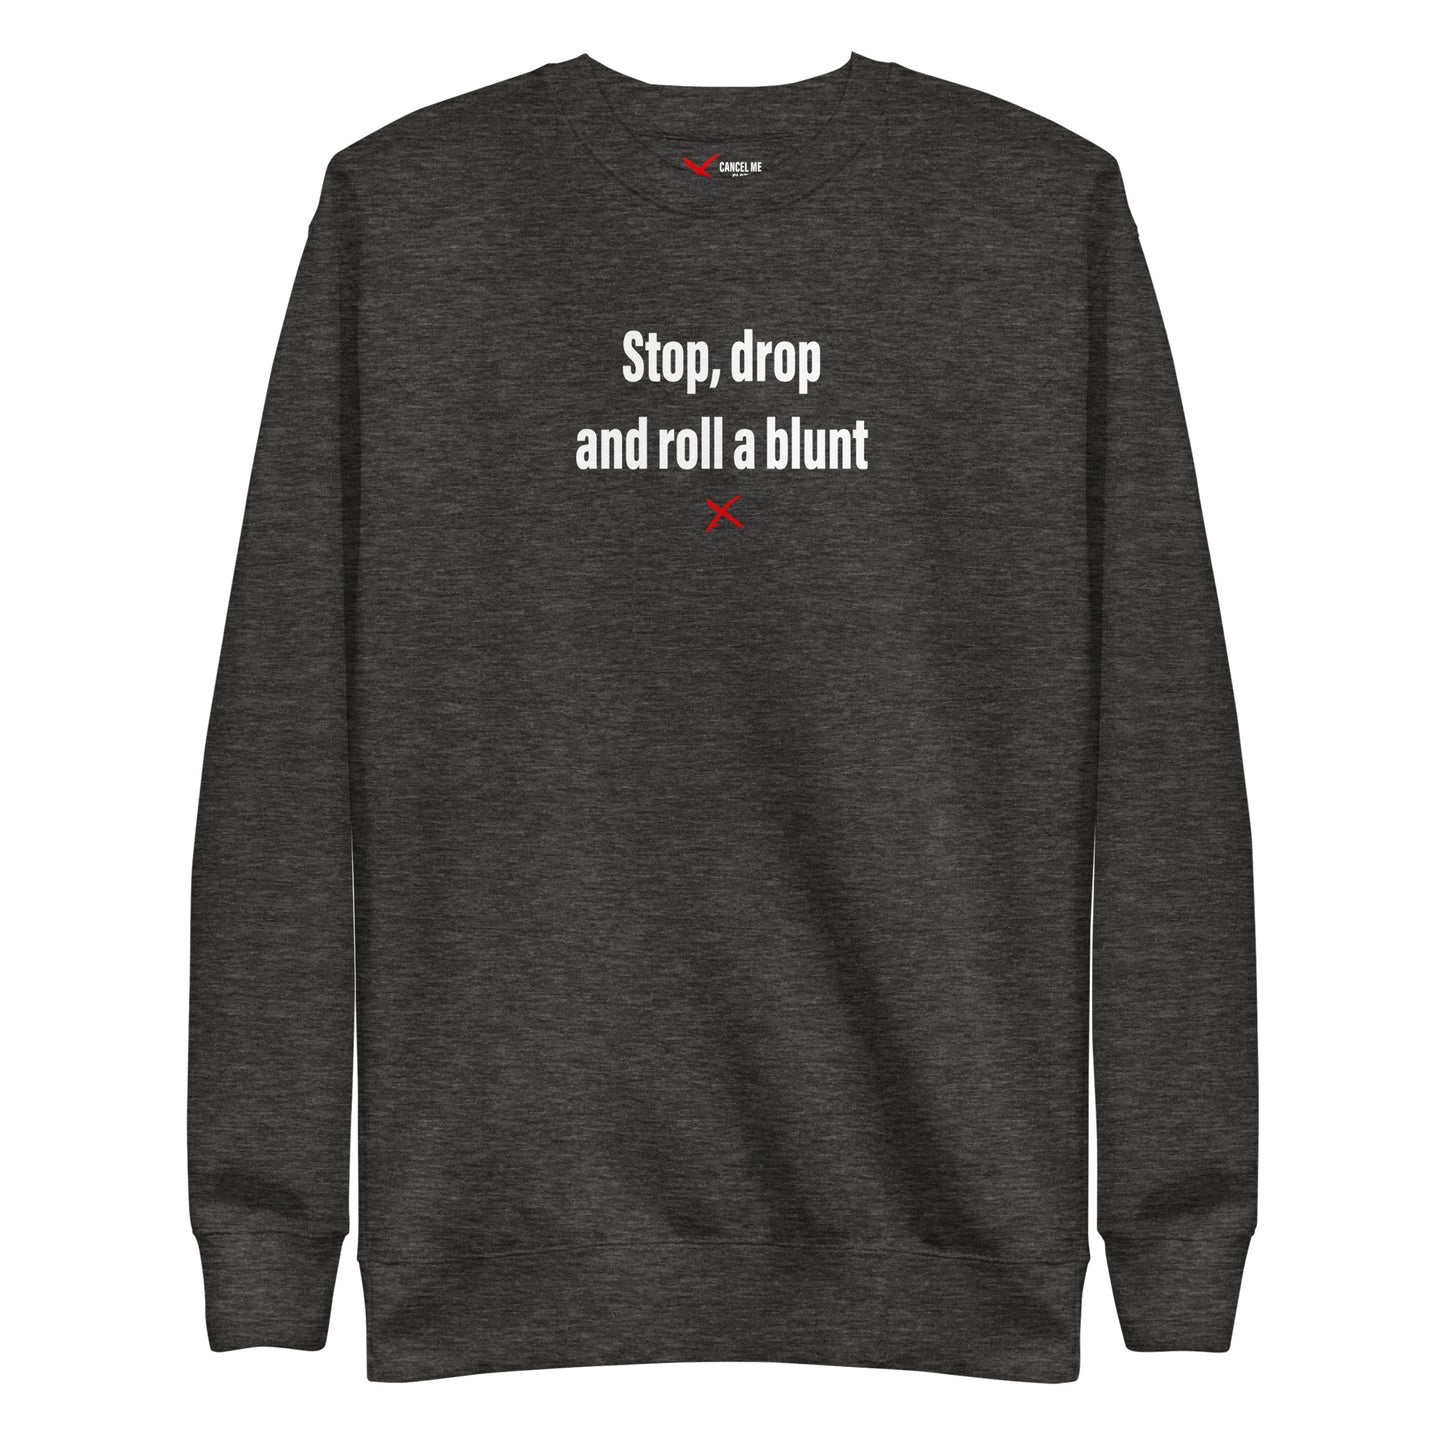 Stop, drop and roll a blunt - Sweatshirt